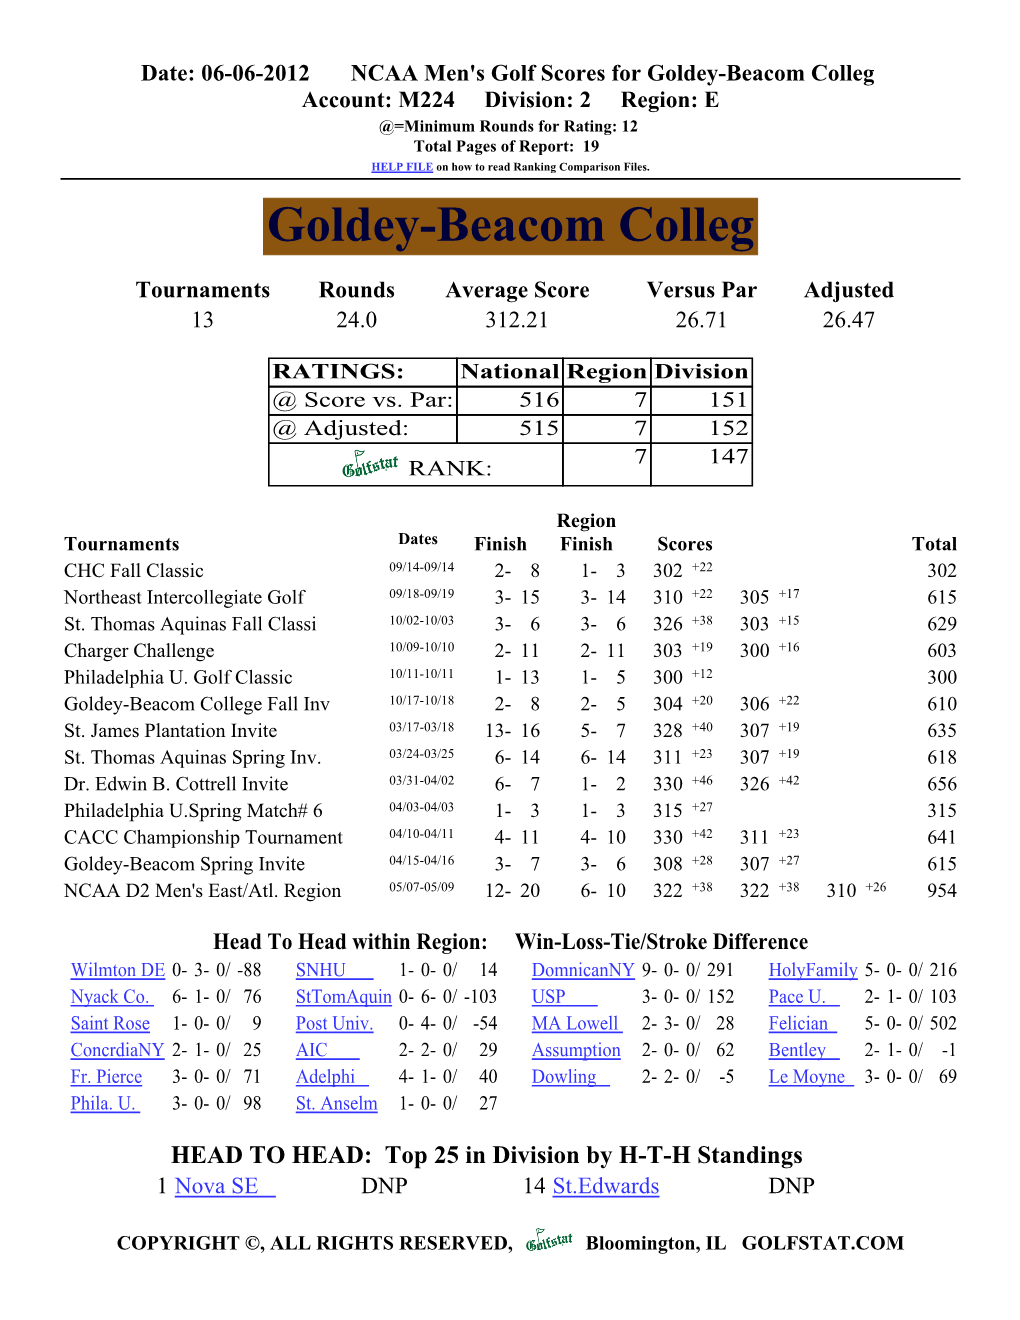 Goldey-Beacom College Athletics